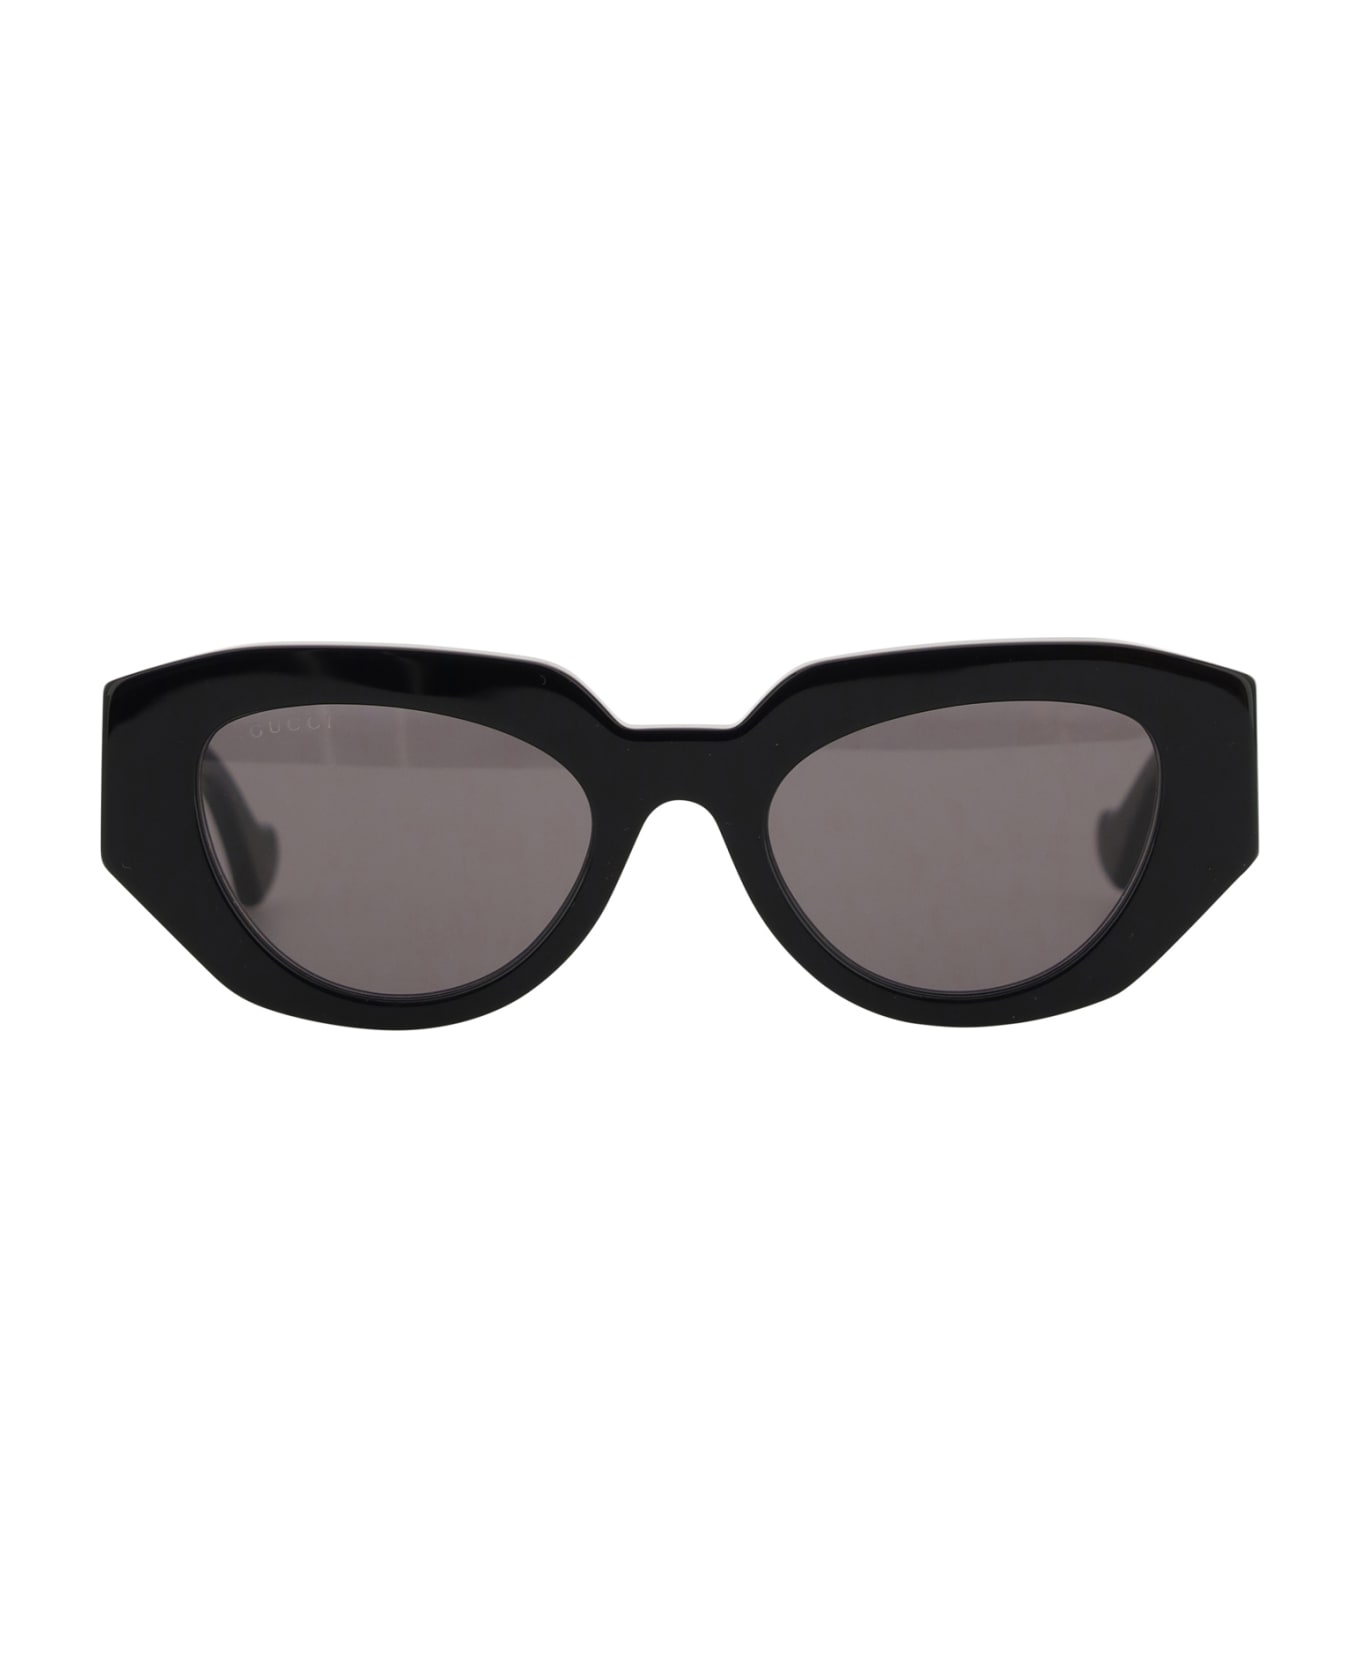 Gucci Eyewear Sunglasses サングラス